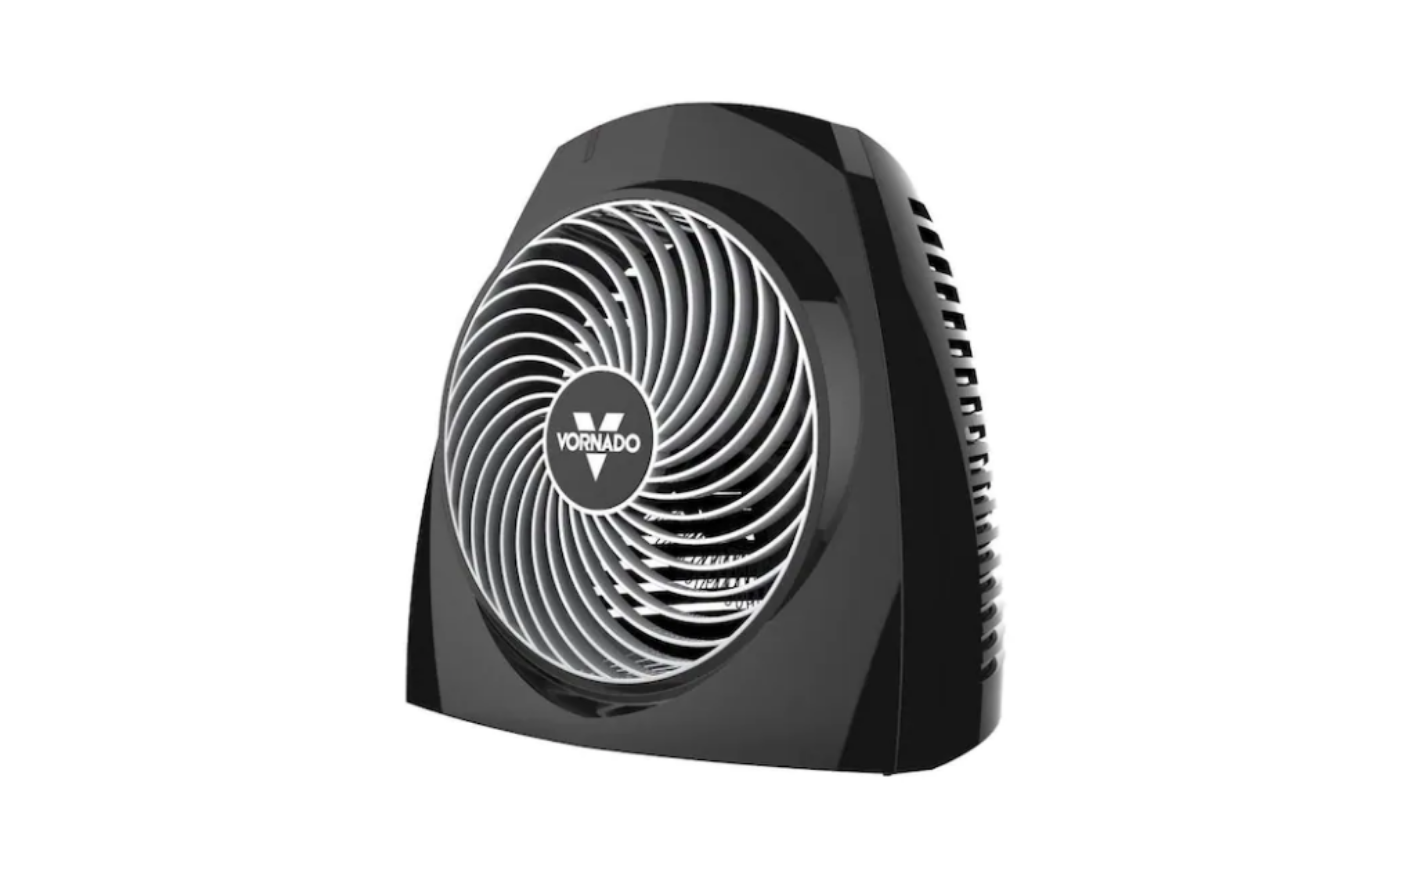 Vornado Whole Room Electric Portable Fan Heater